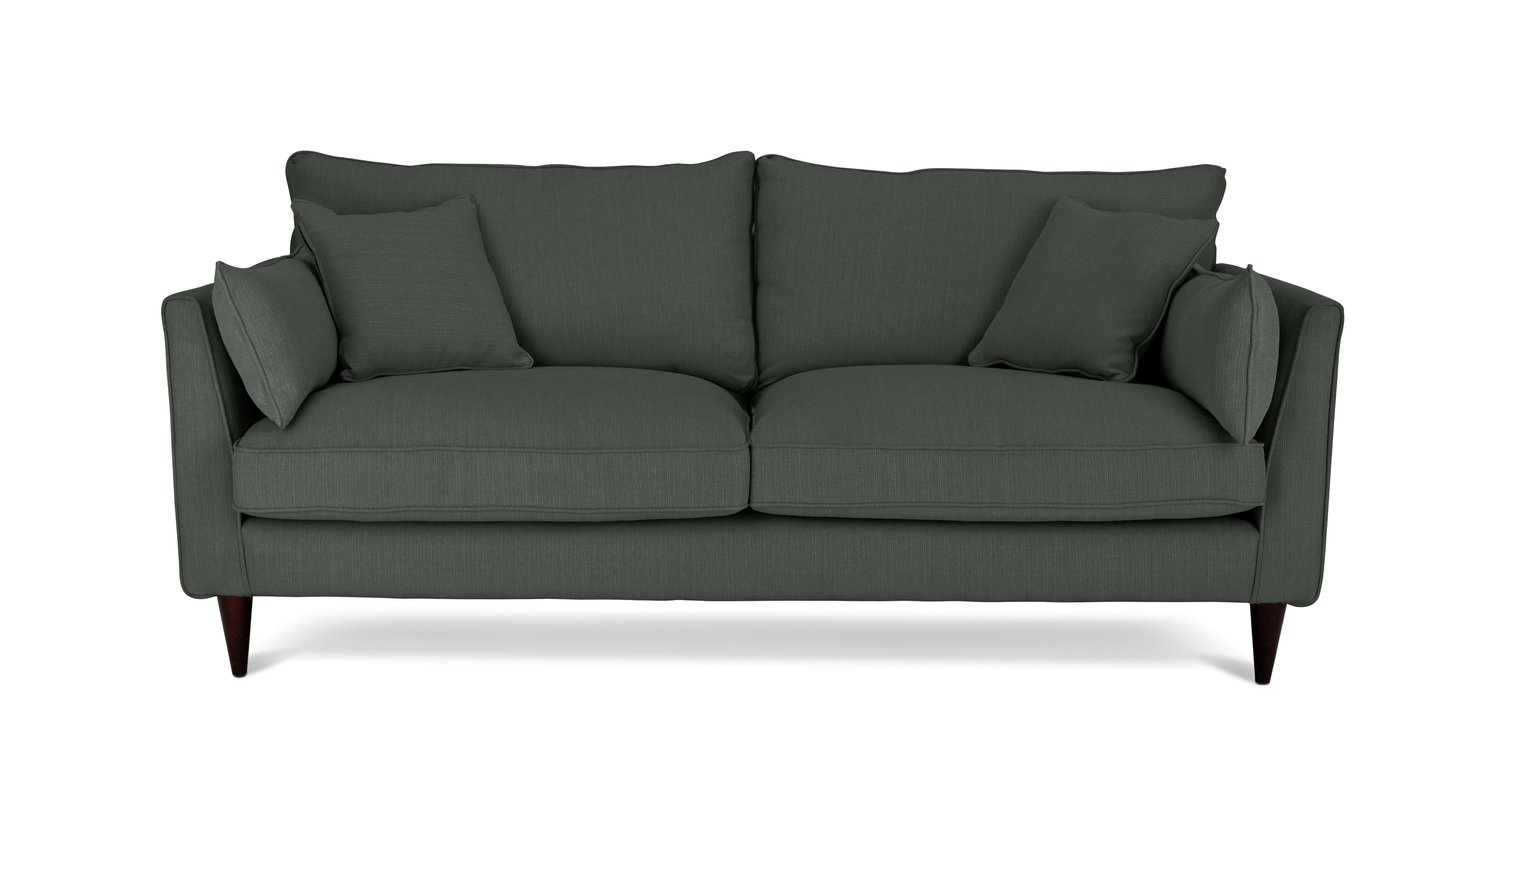 Habitat Hector 3 Seater Fabric Sofa - Charcoal Linen